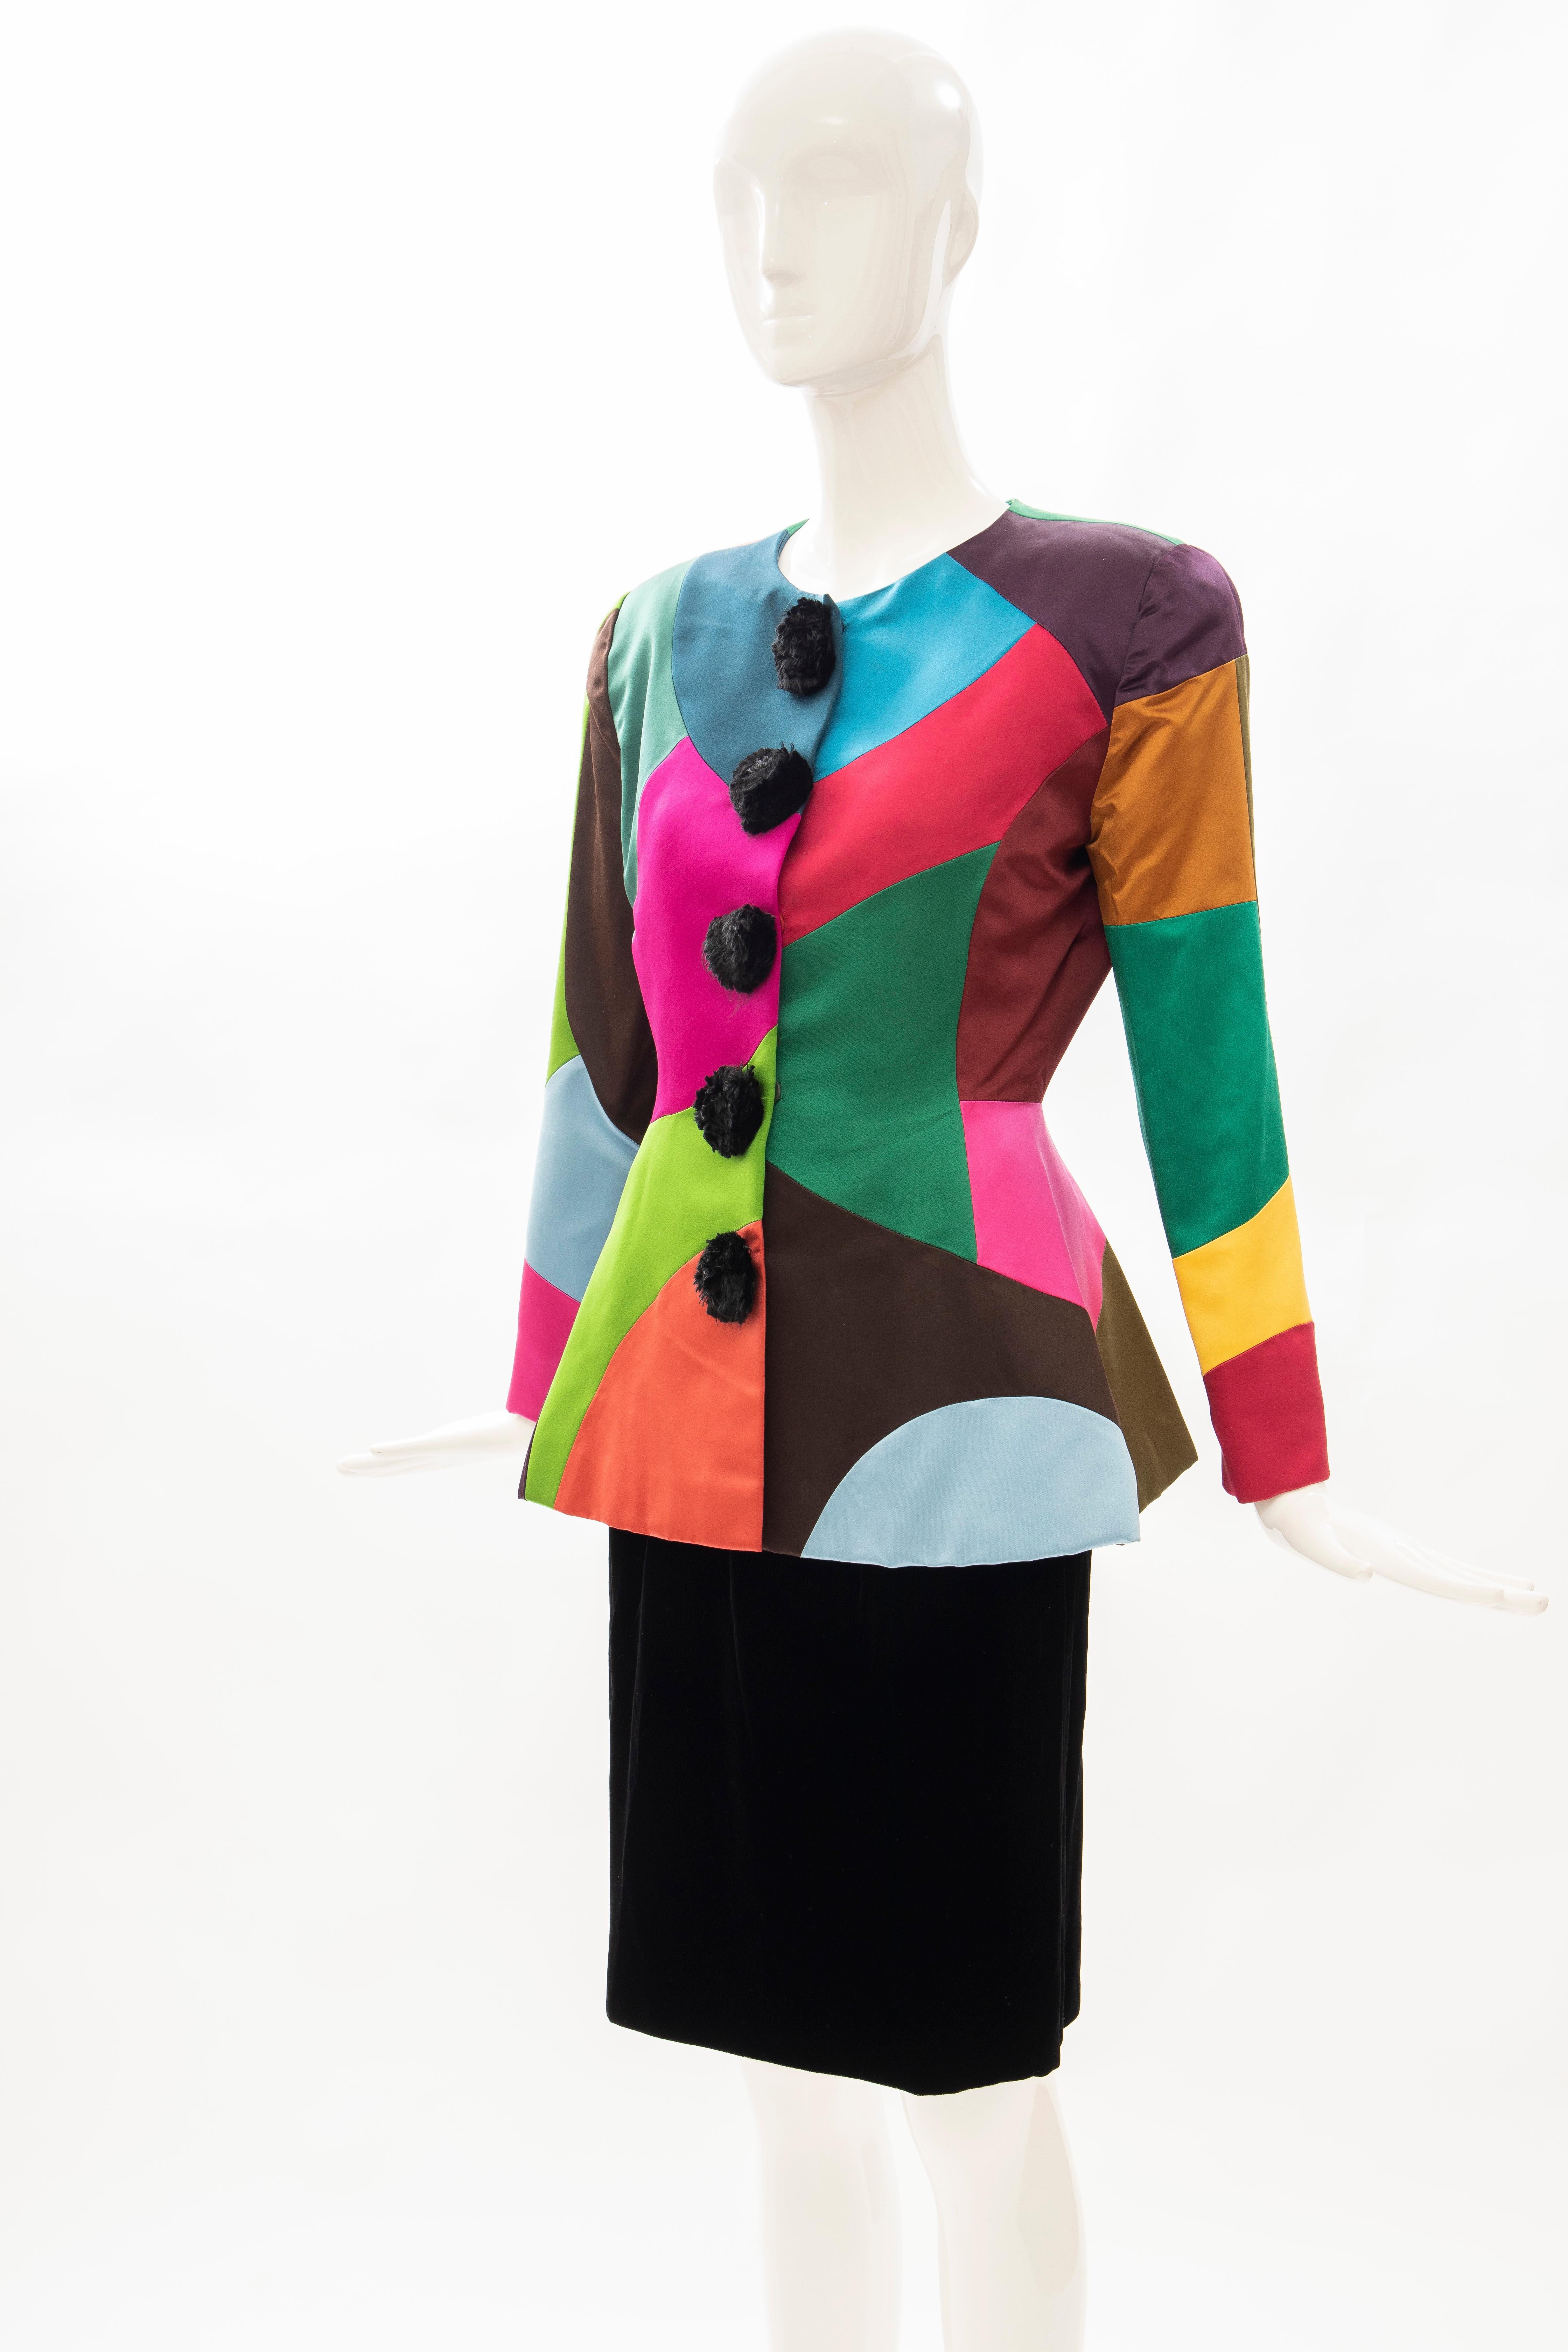 Oscar de la Renta Runway Silk Color-Block Skirt Suit, Fall 1991 For Sale 3